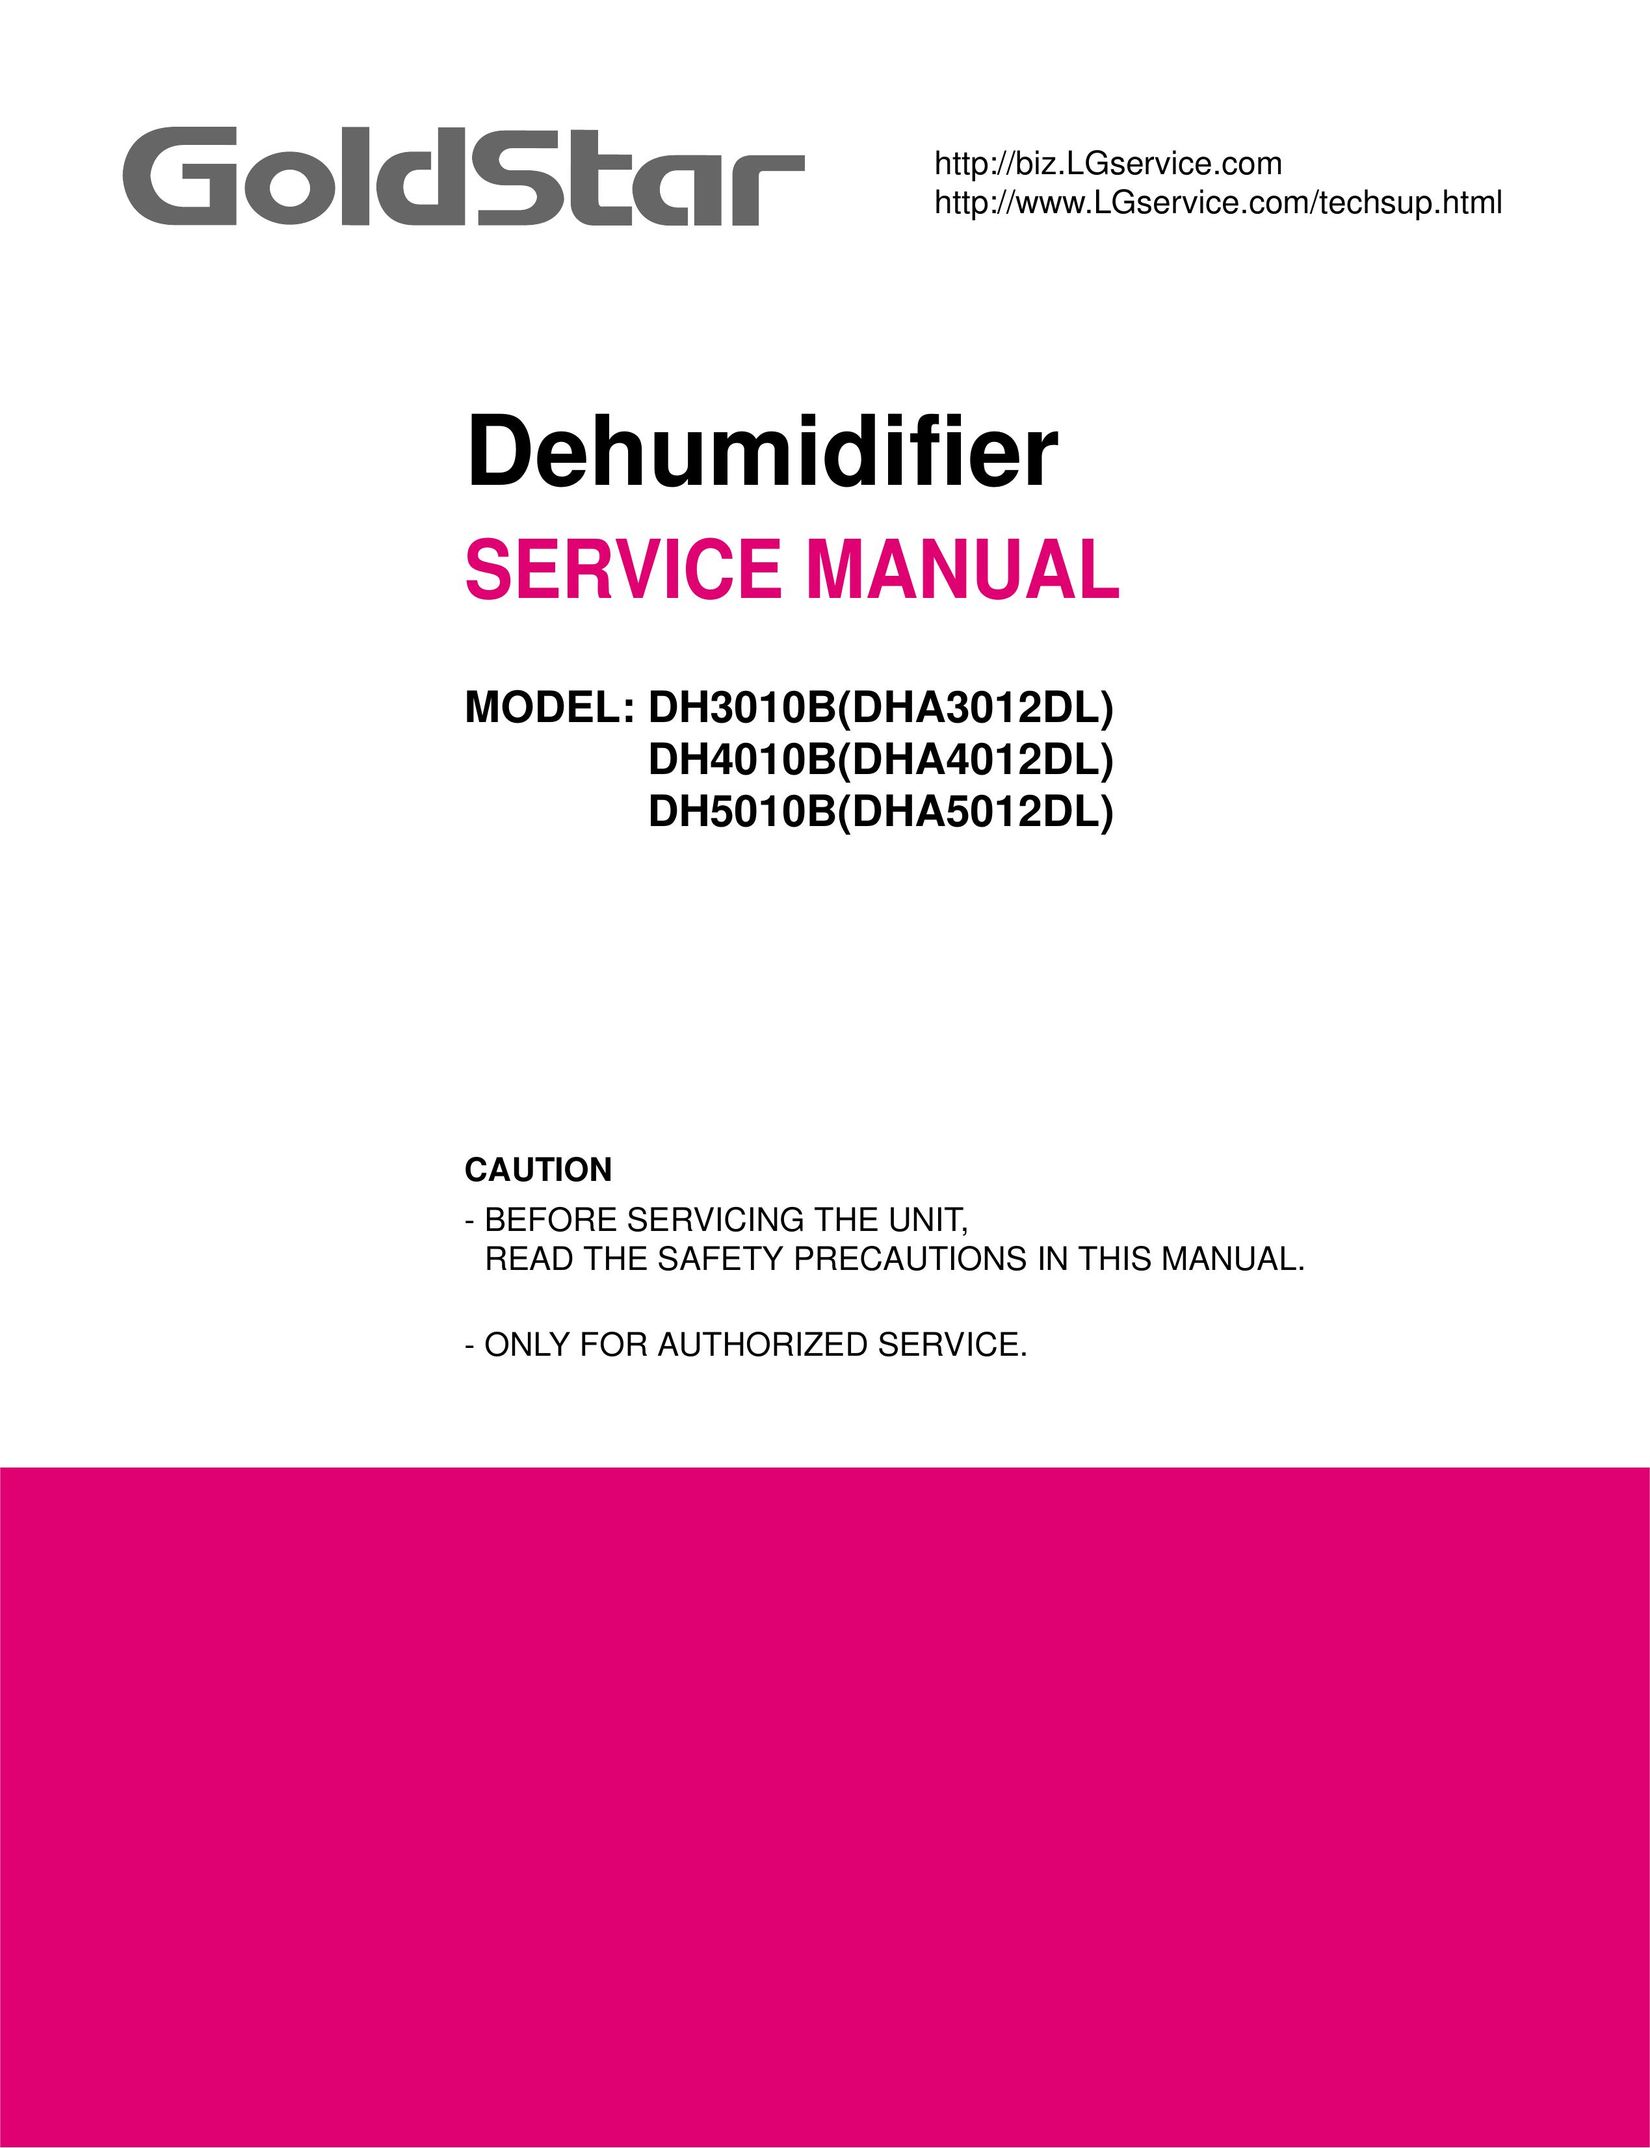 Goldstar DH3010B Dehumidifier User Manual